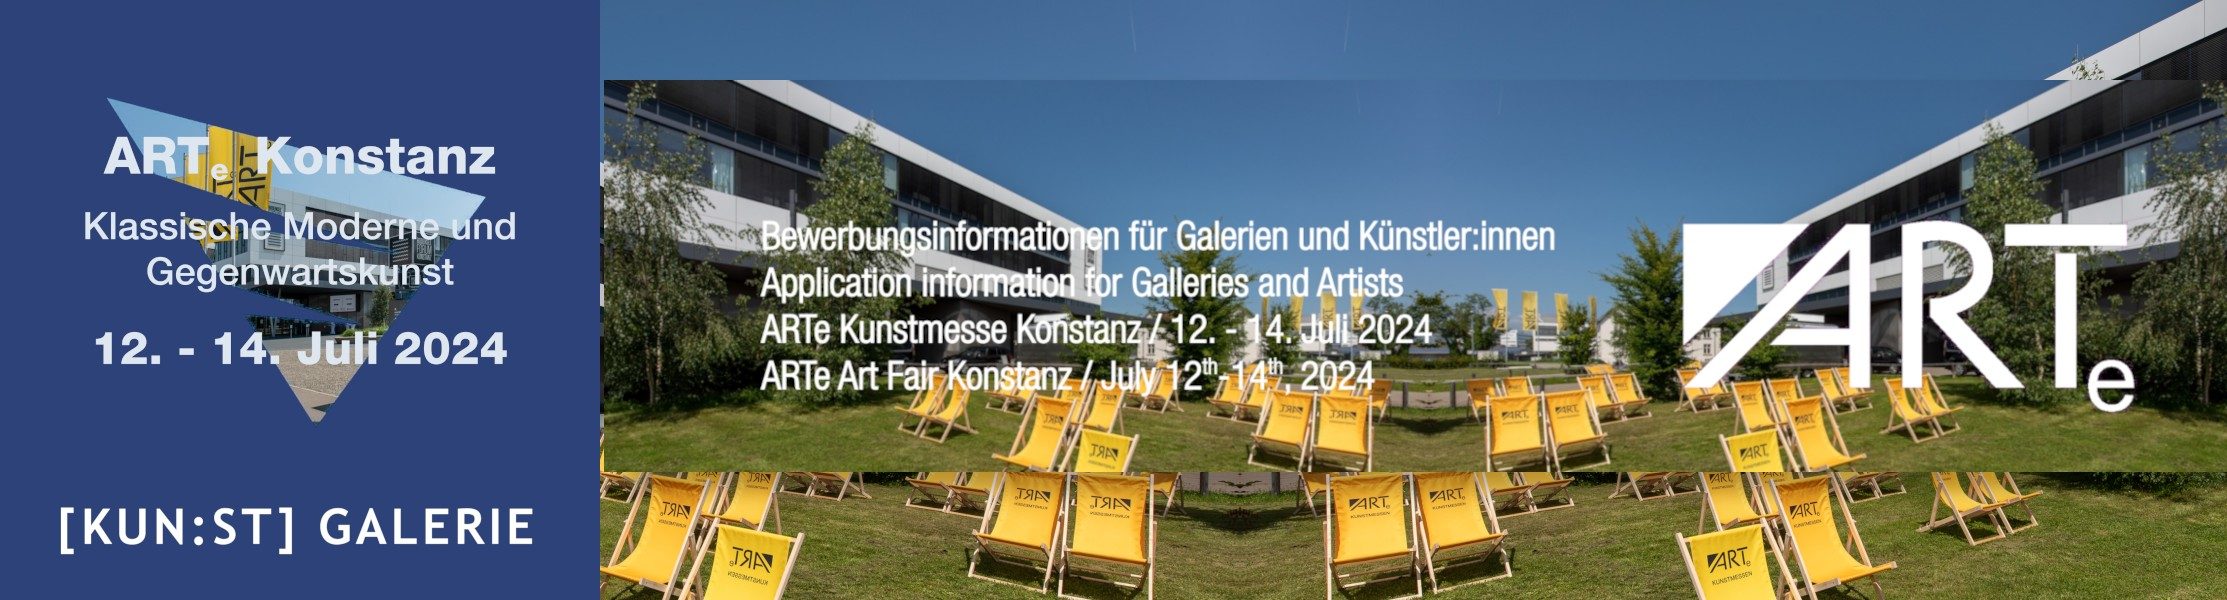 2024-ARTe-Konstanz_Banner